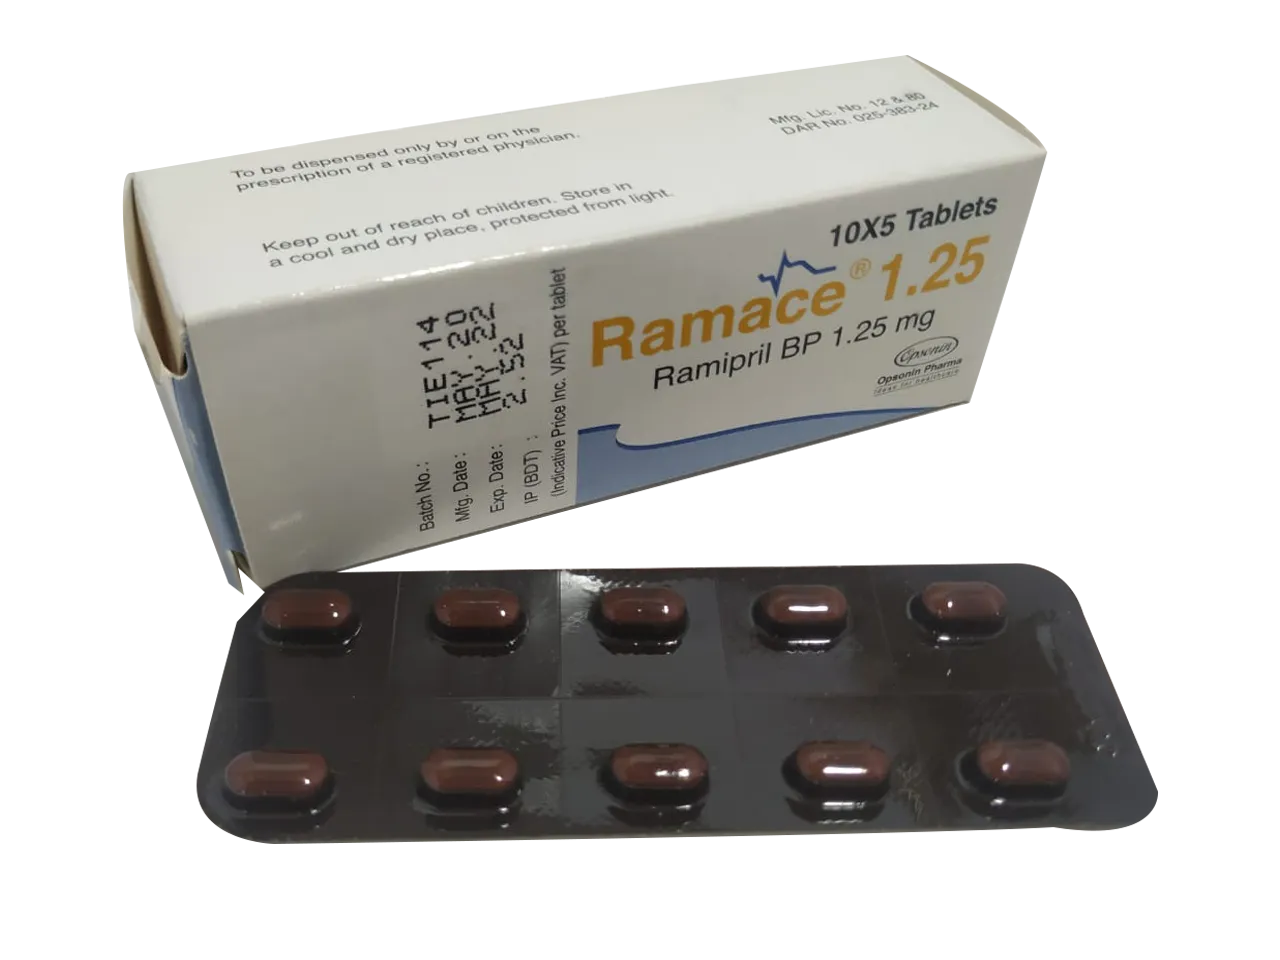 Ramace 1.25 mg Tablet-10's Strip